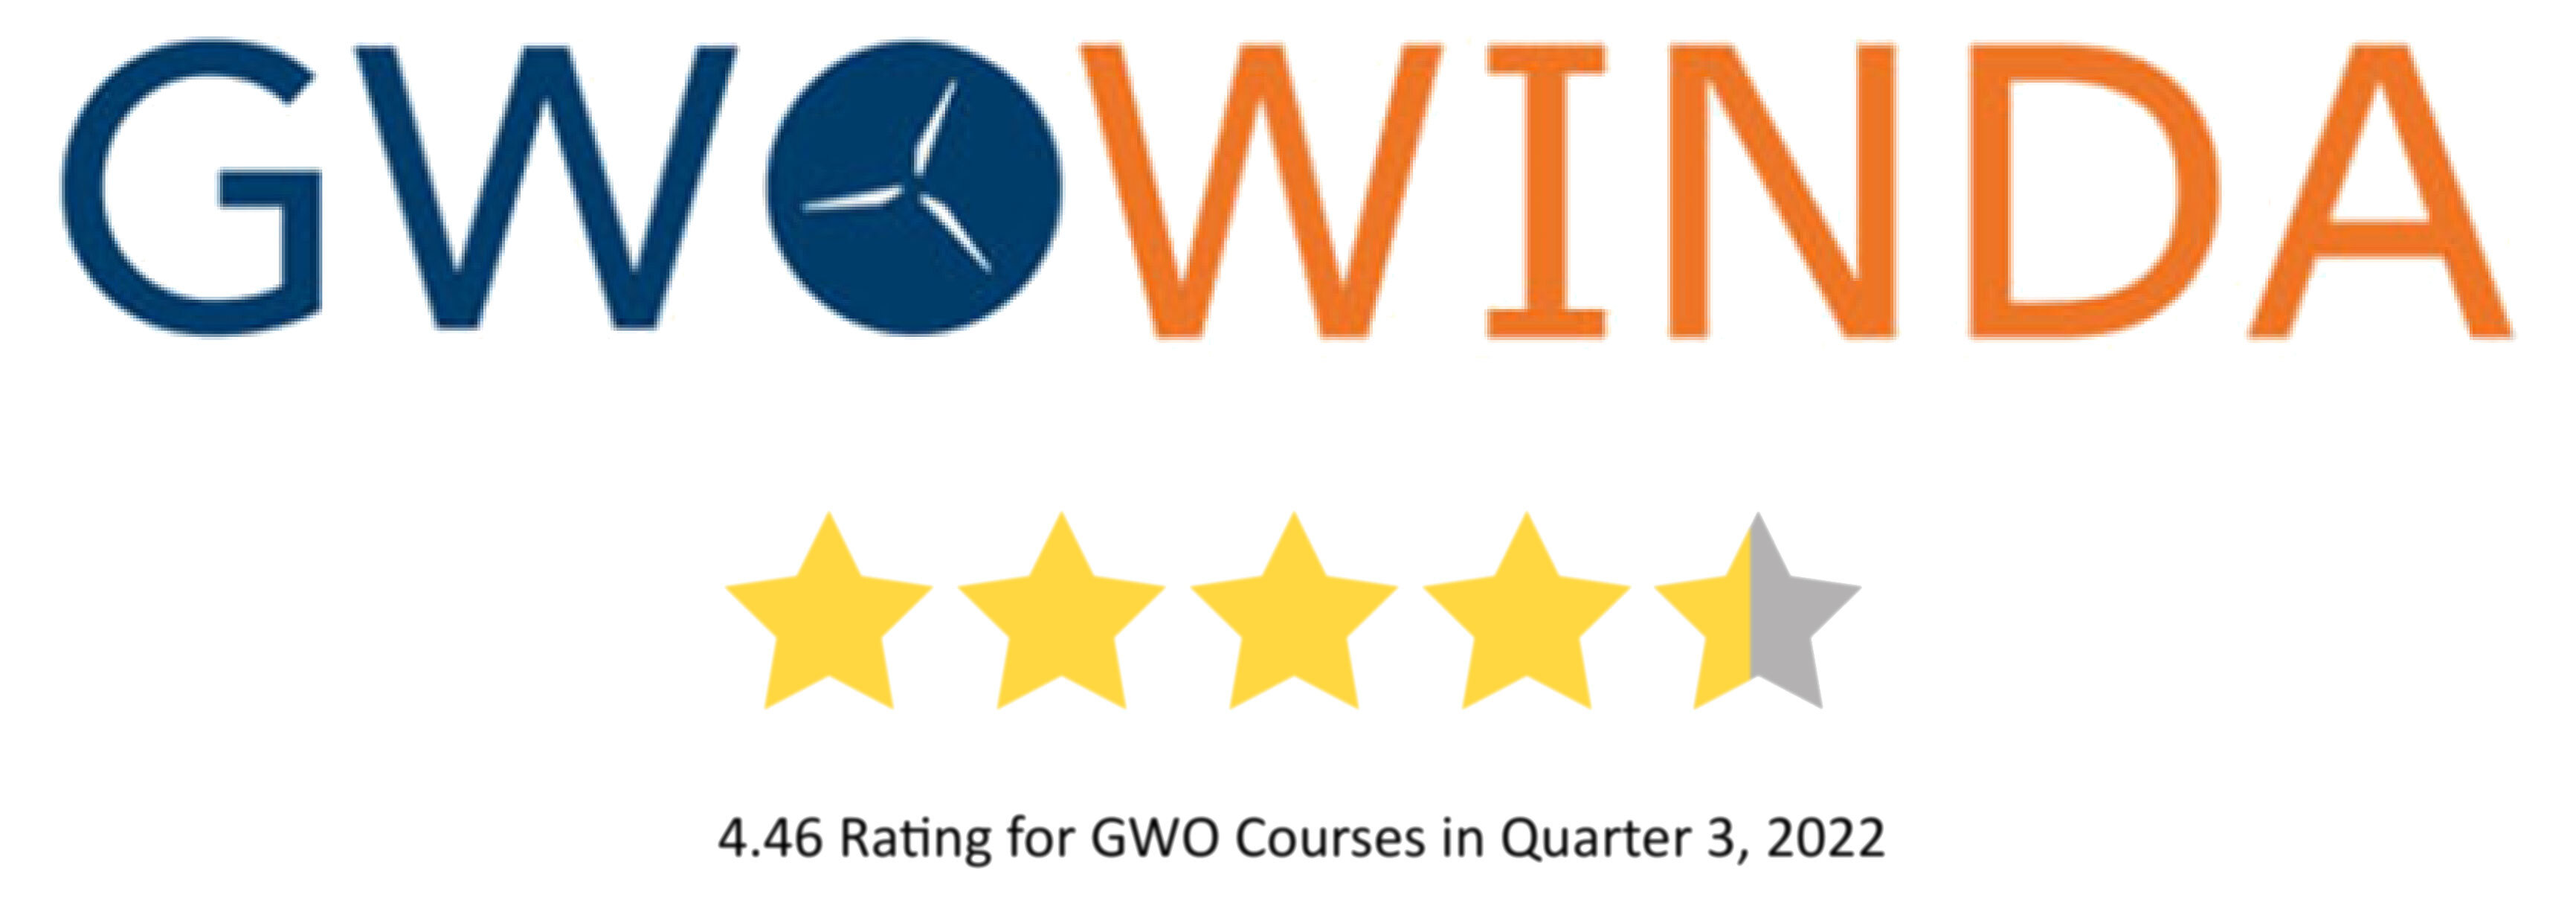 GWO-Winda-Star-Rating_Q3_2022.jpg